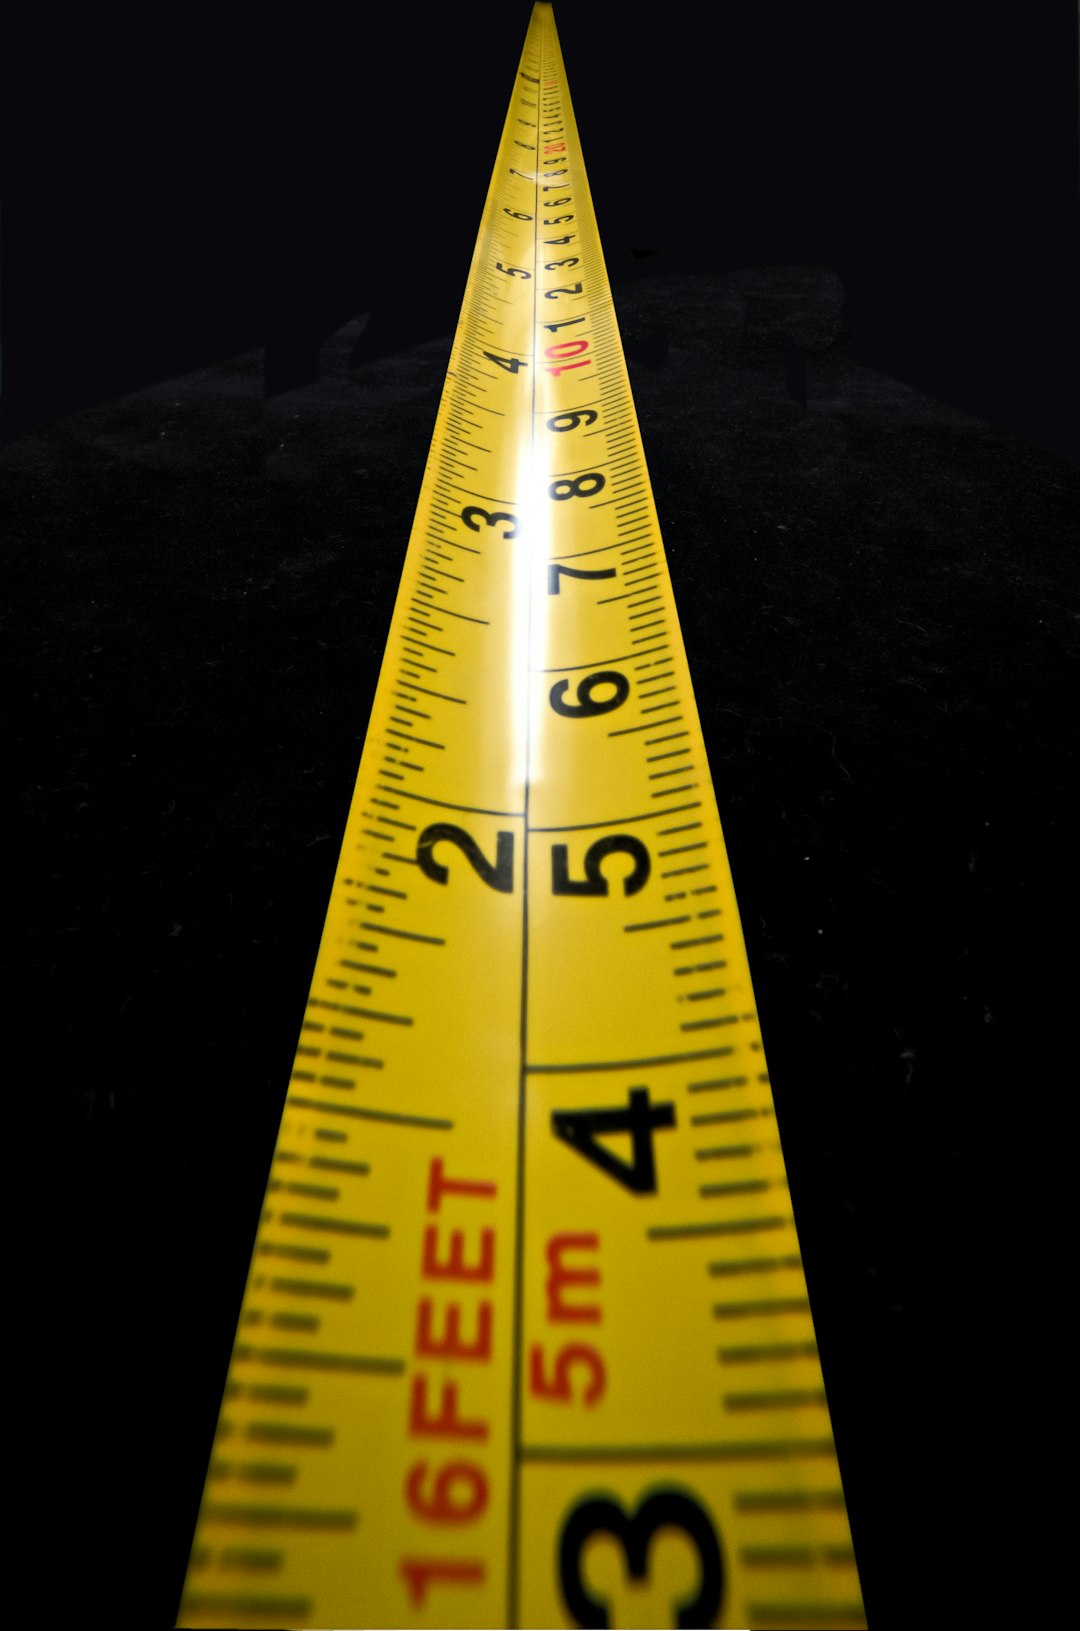 How do you measure up?
